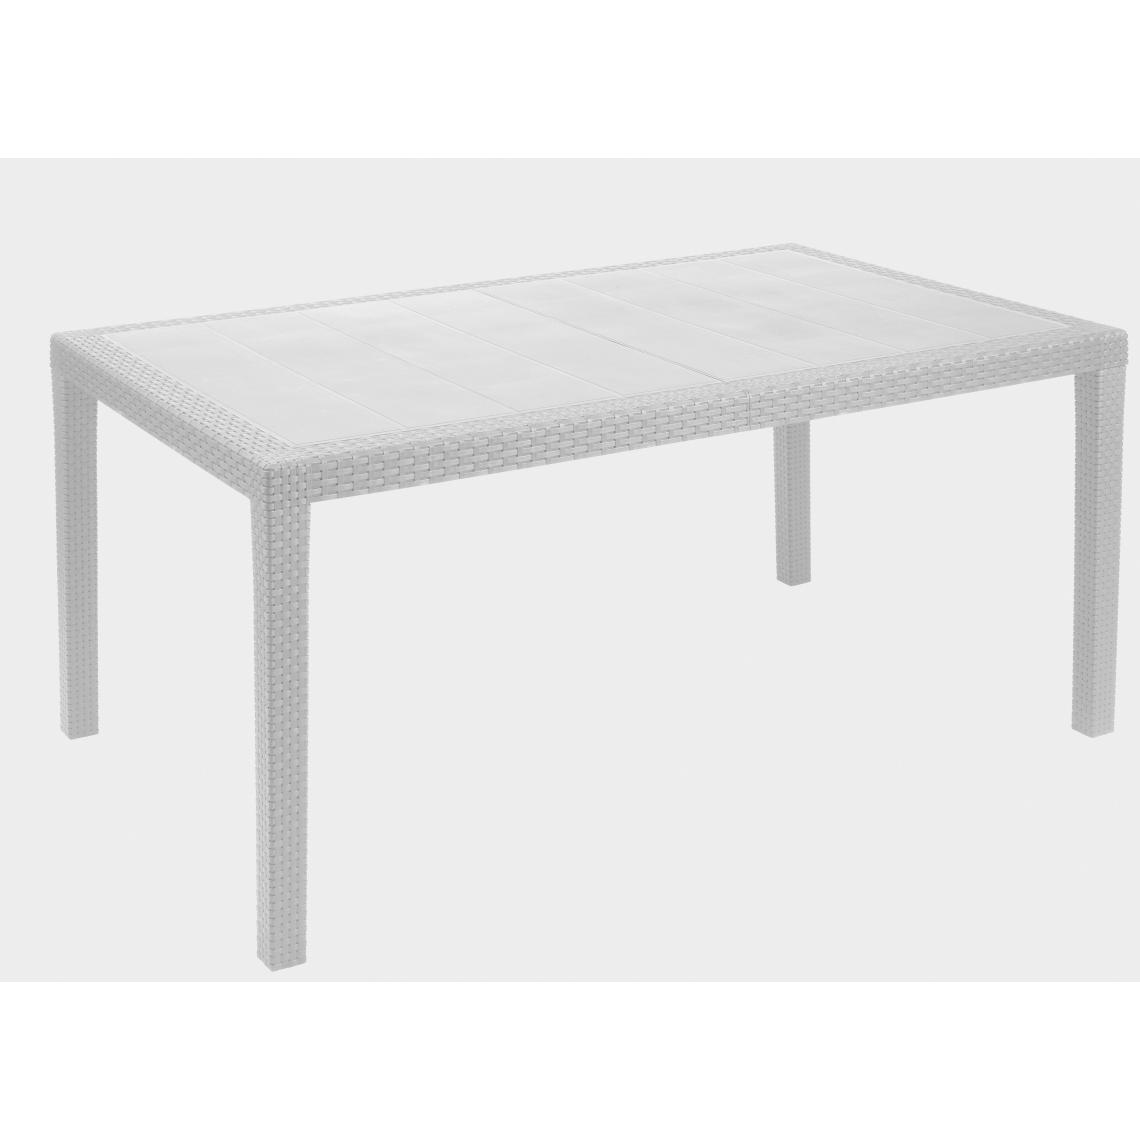 Alter - Table de jardin rectangulaire, Made in Italy, 138x78x72 cm, couleur Blanc - Tables à manger